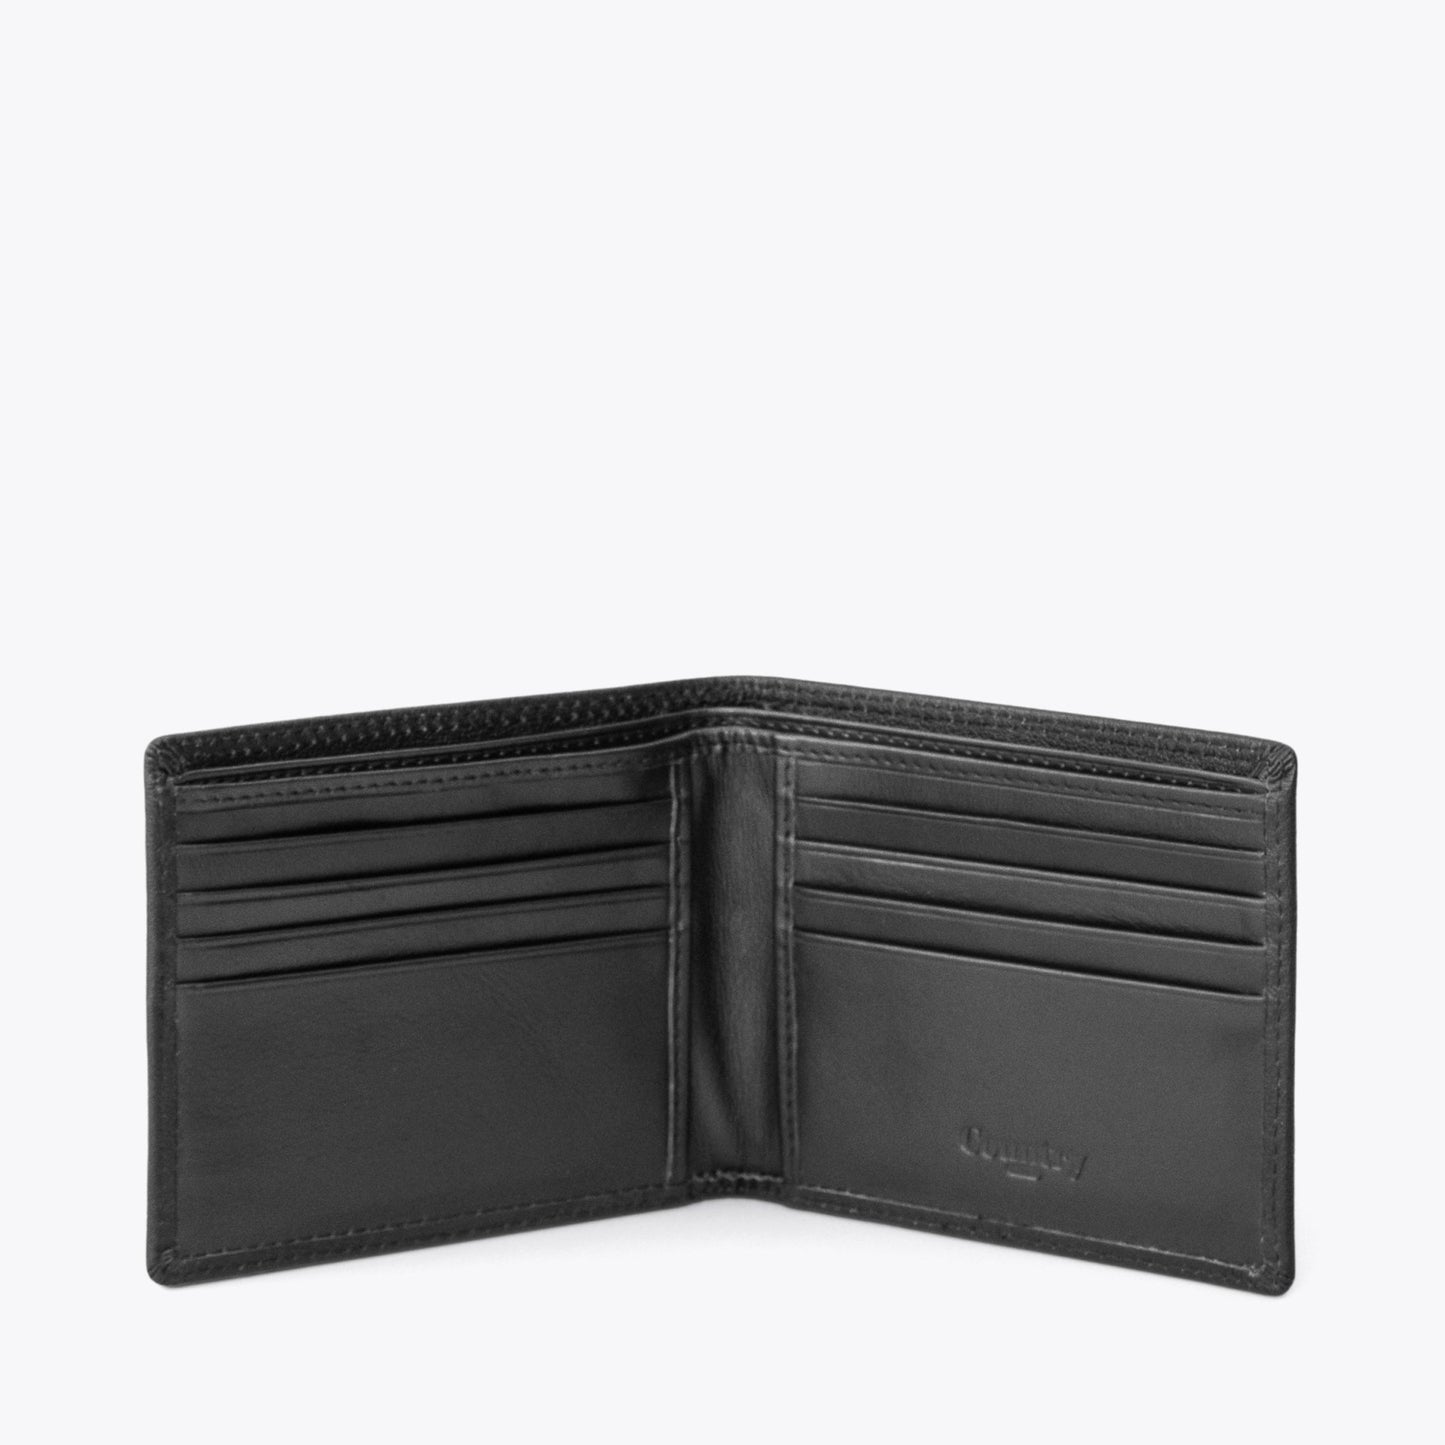 URBAN Billfold Wallet - Dual - www.countryhide.com